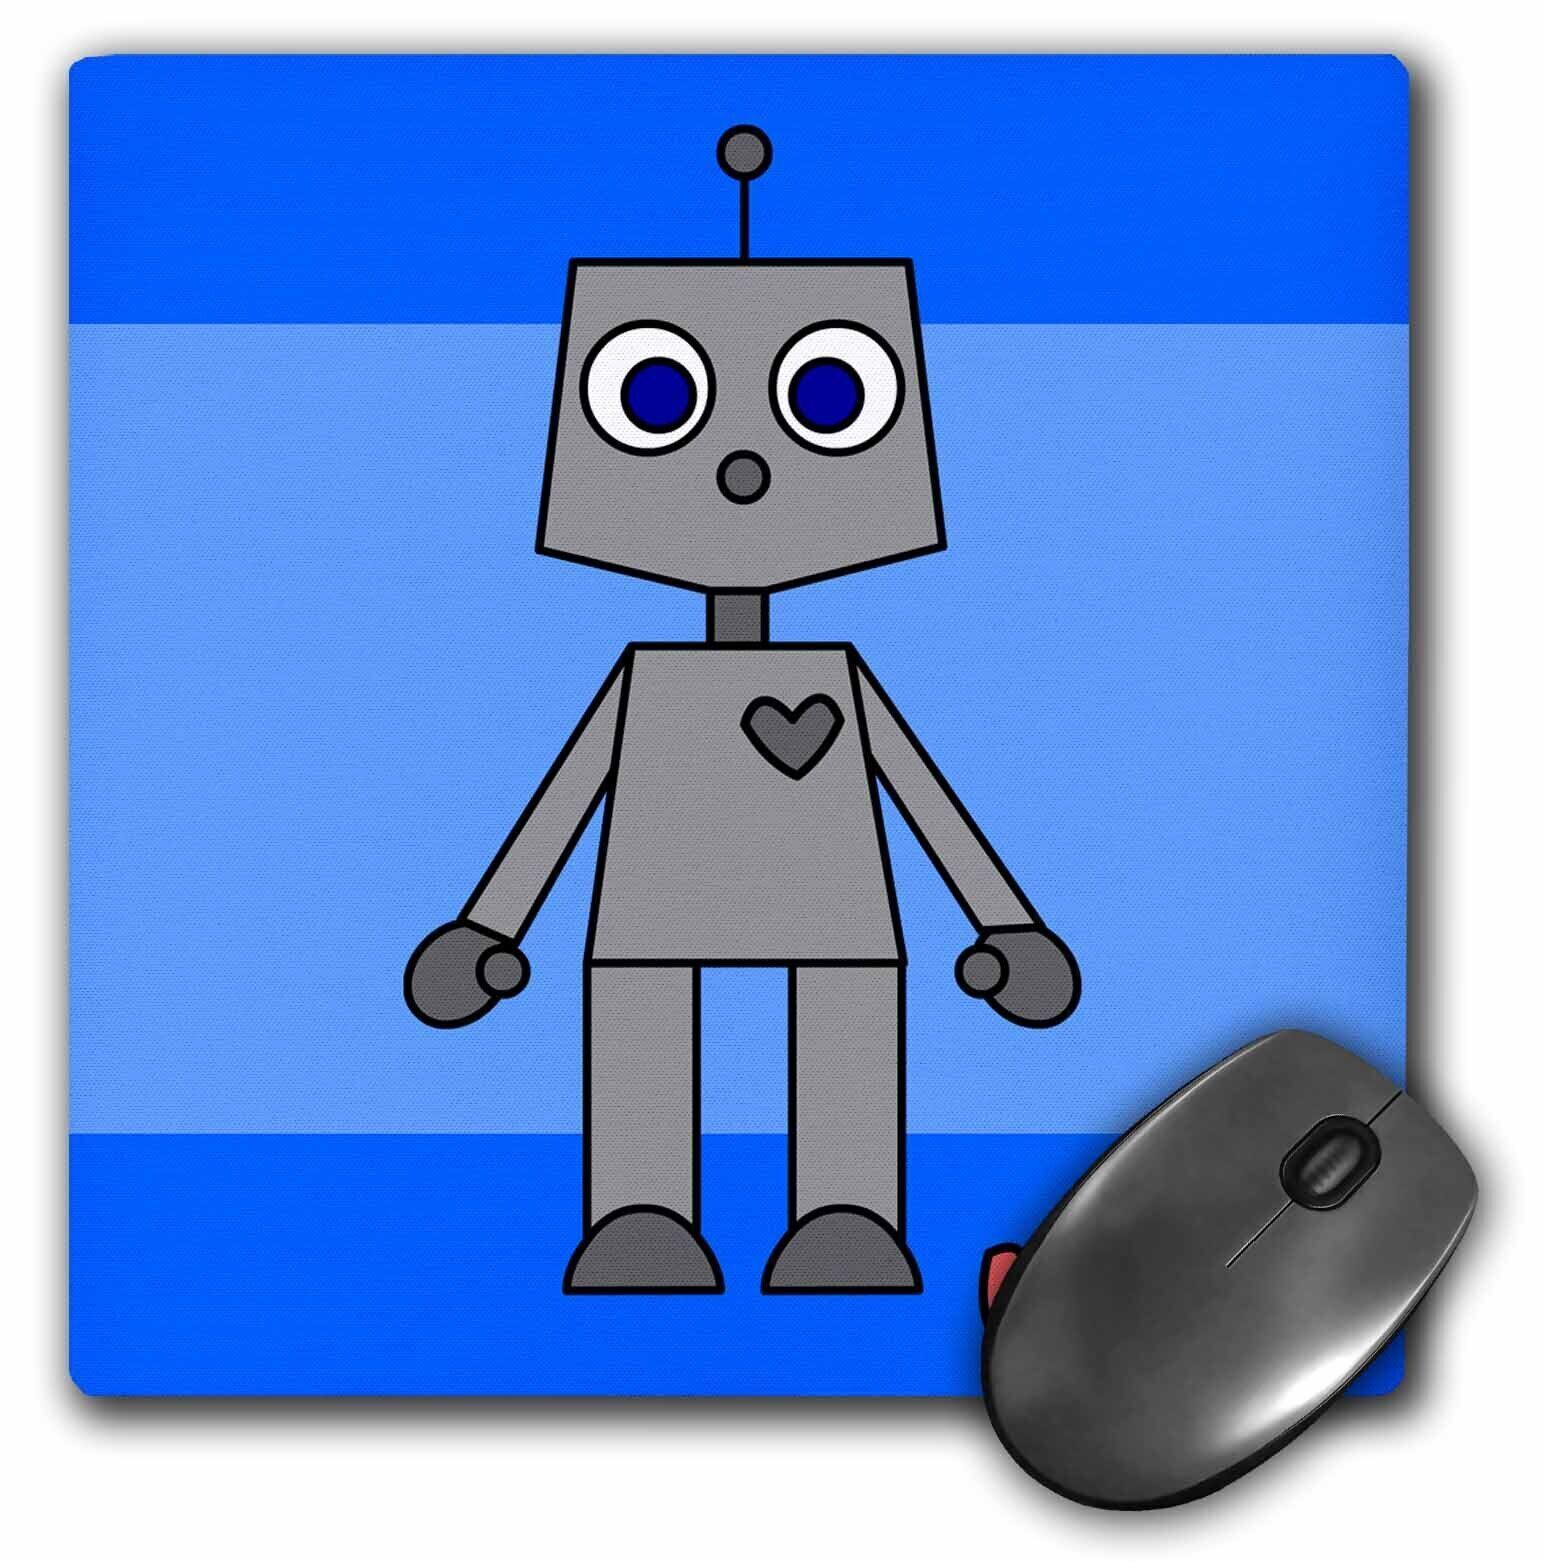 3dRose Cute Robot Blue Background MousePad